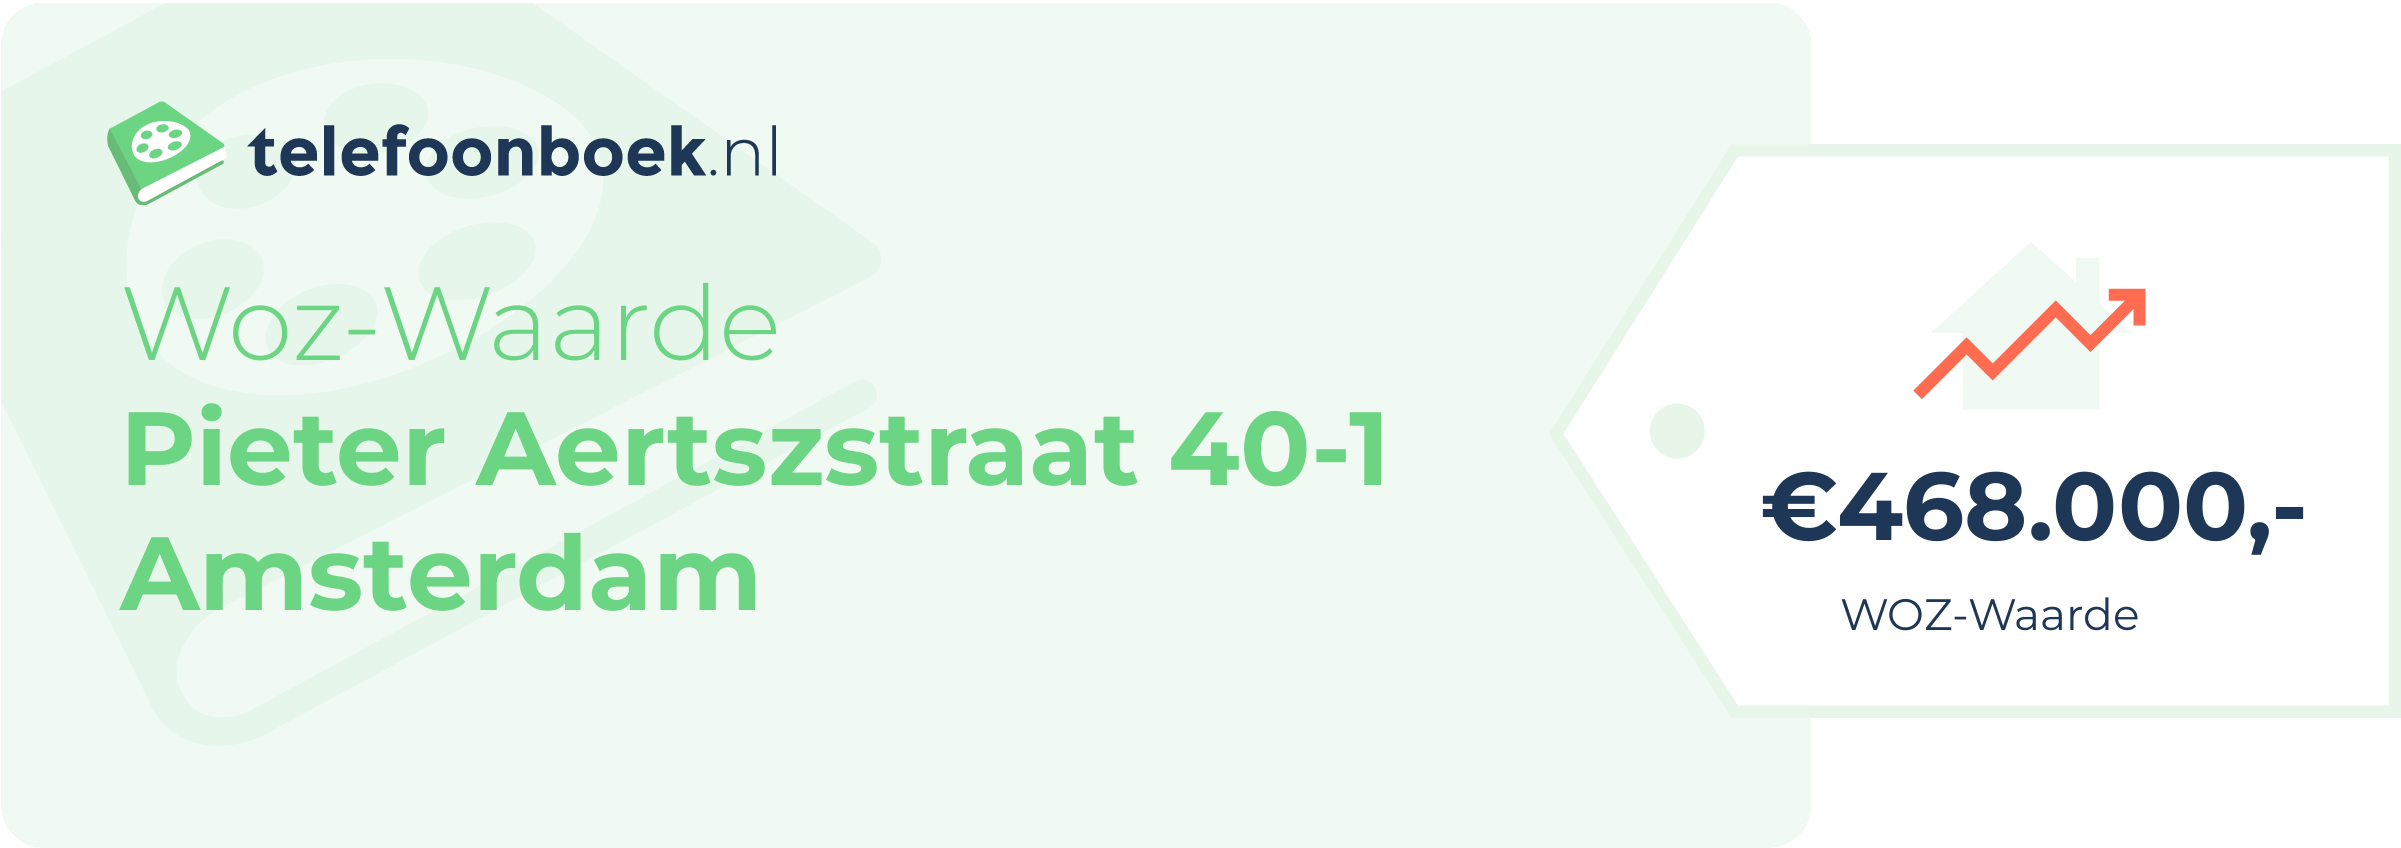 WOZ-waarde Pieter Aertszstraat 40-1 Amsterdam